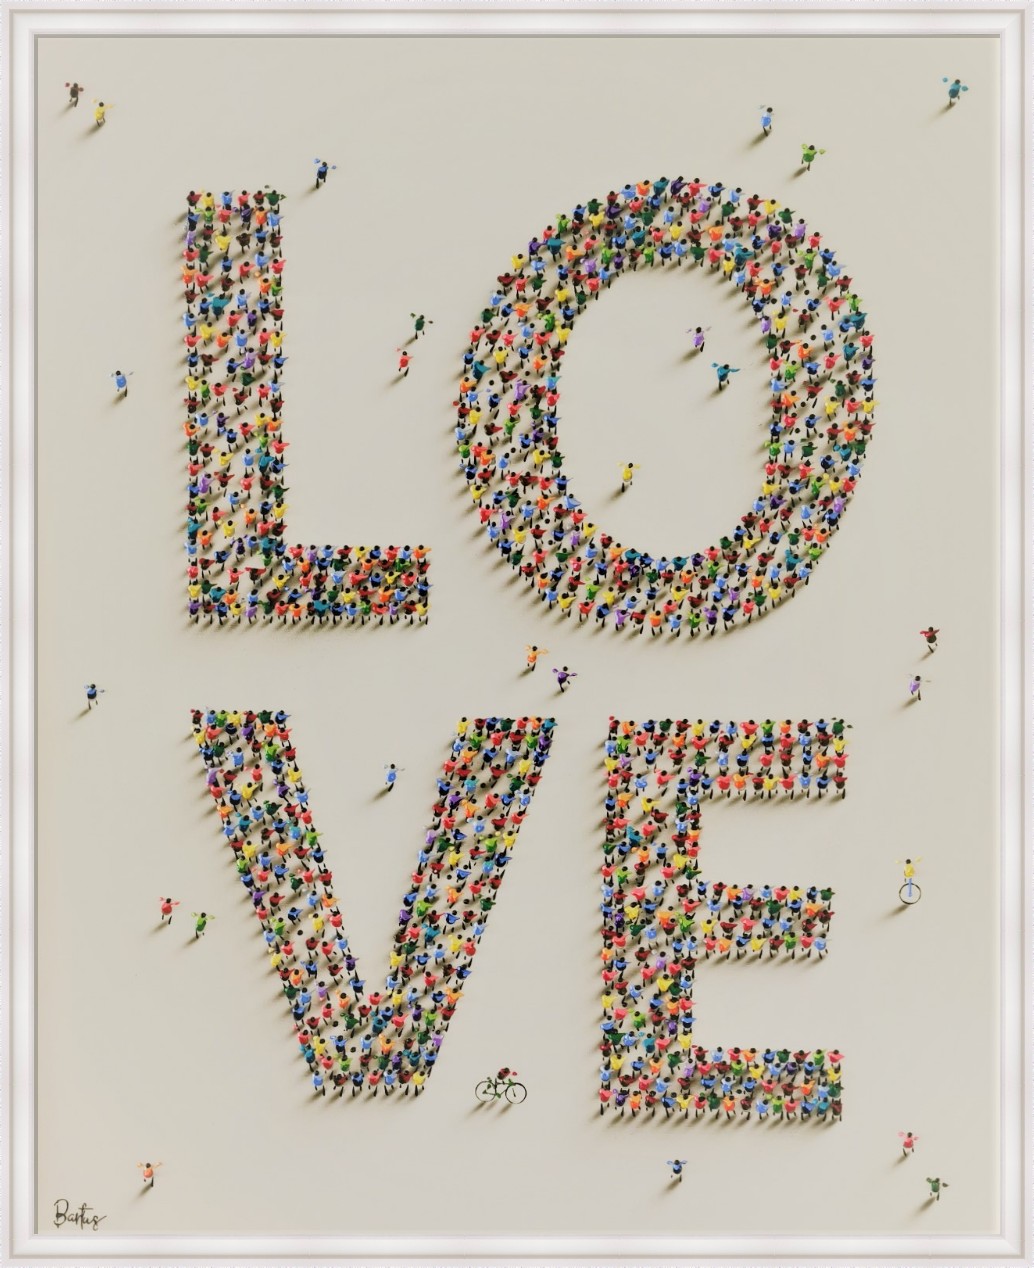 LOVE XI by Francisco Bartus